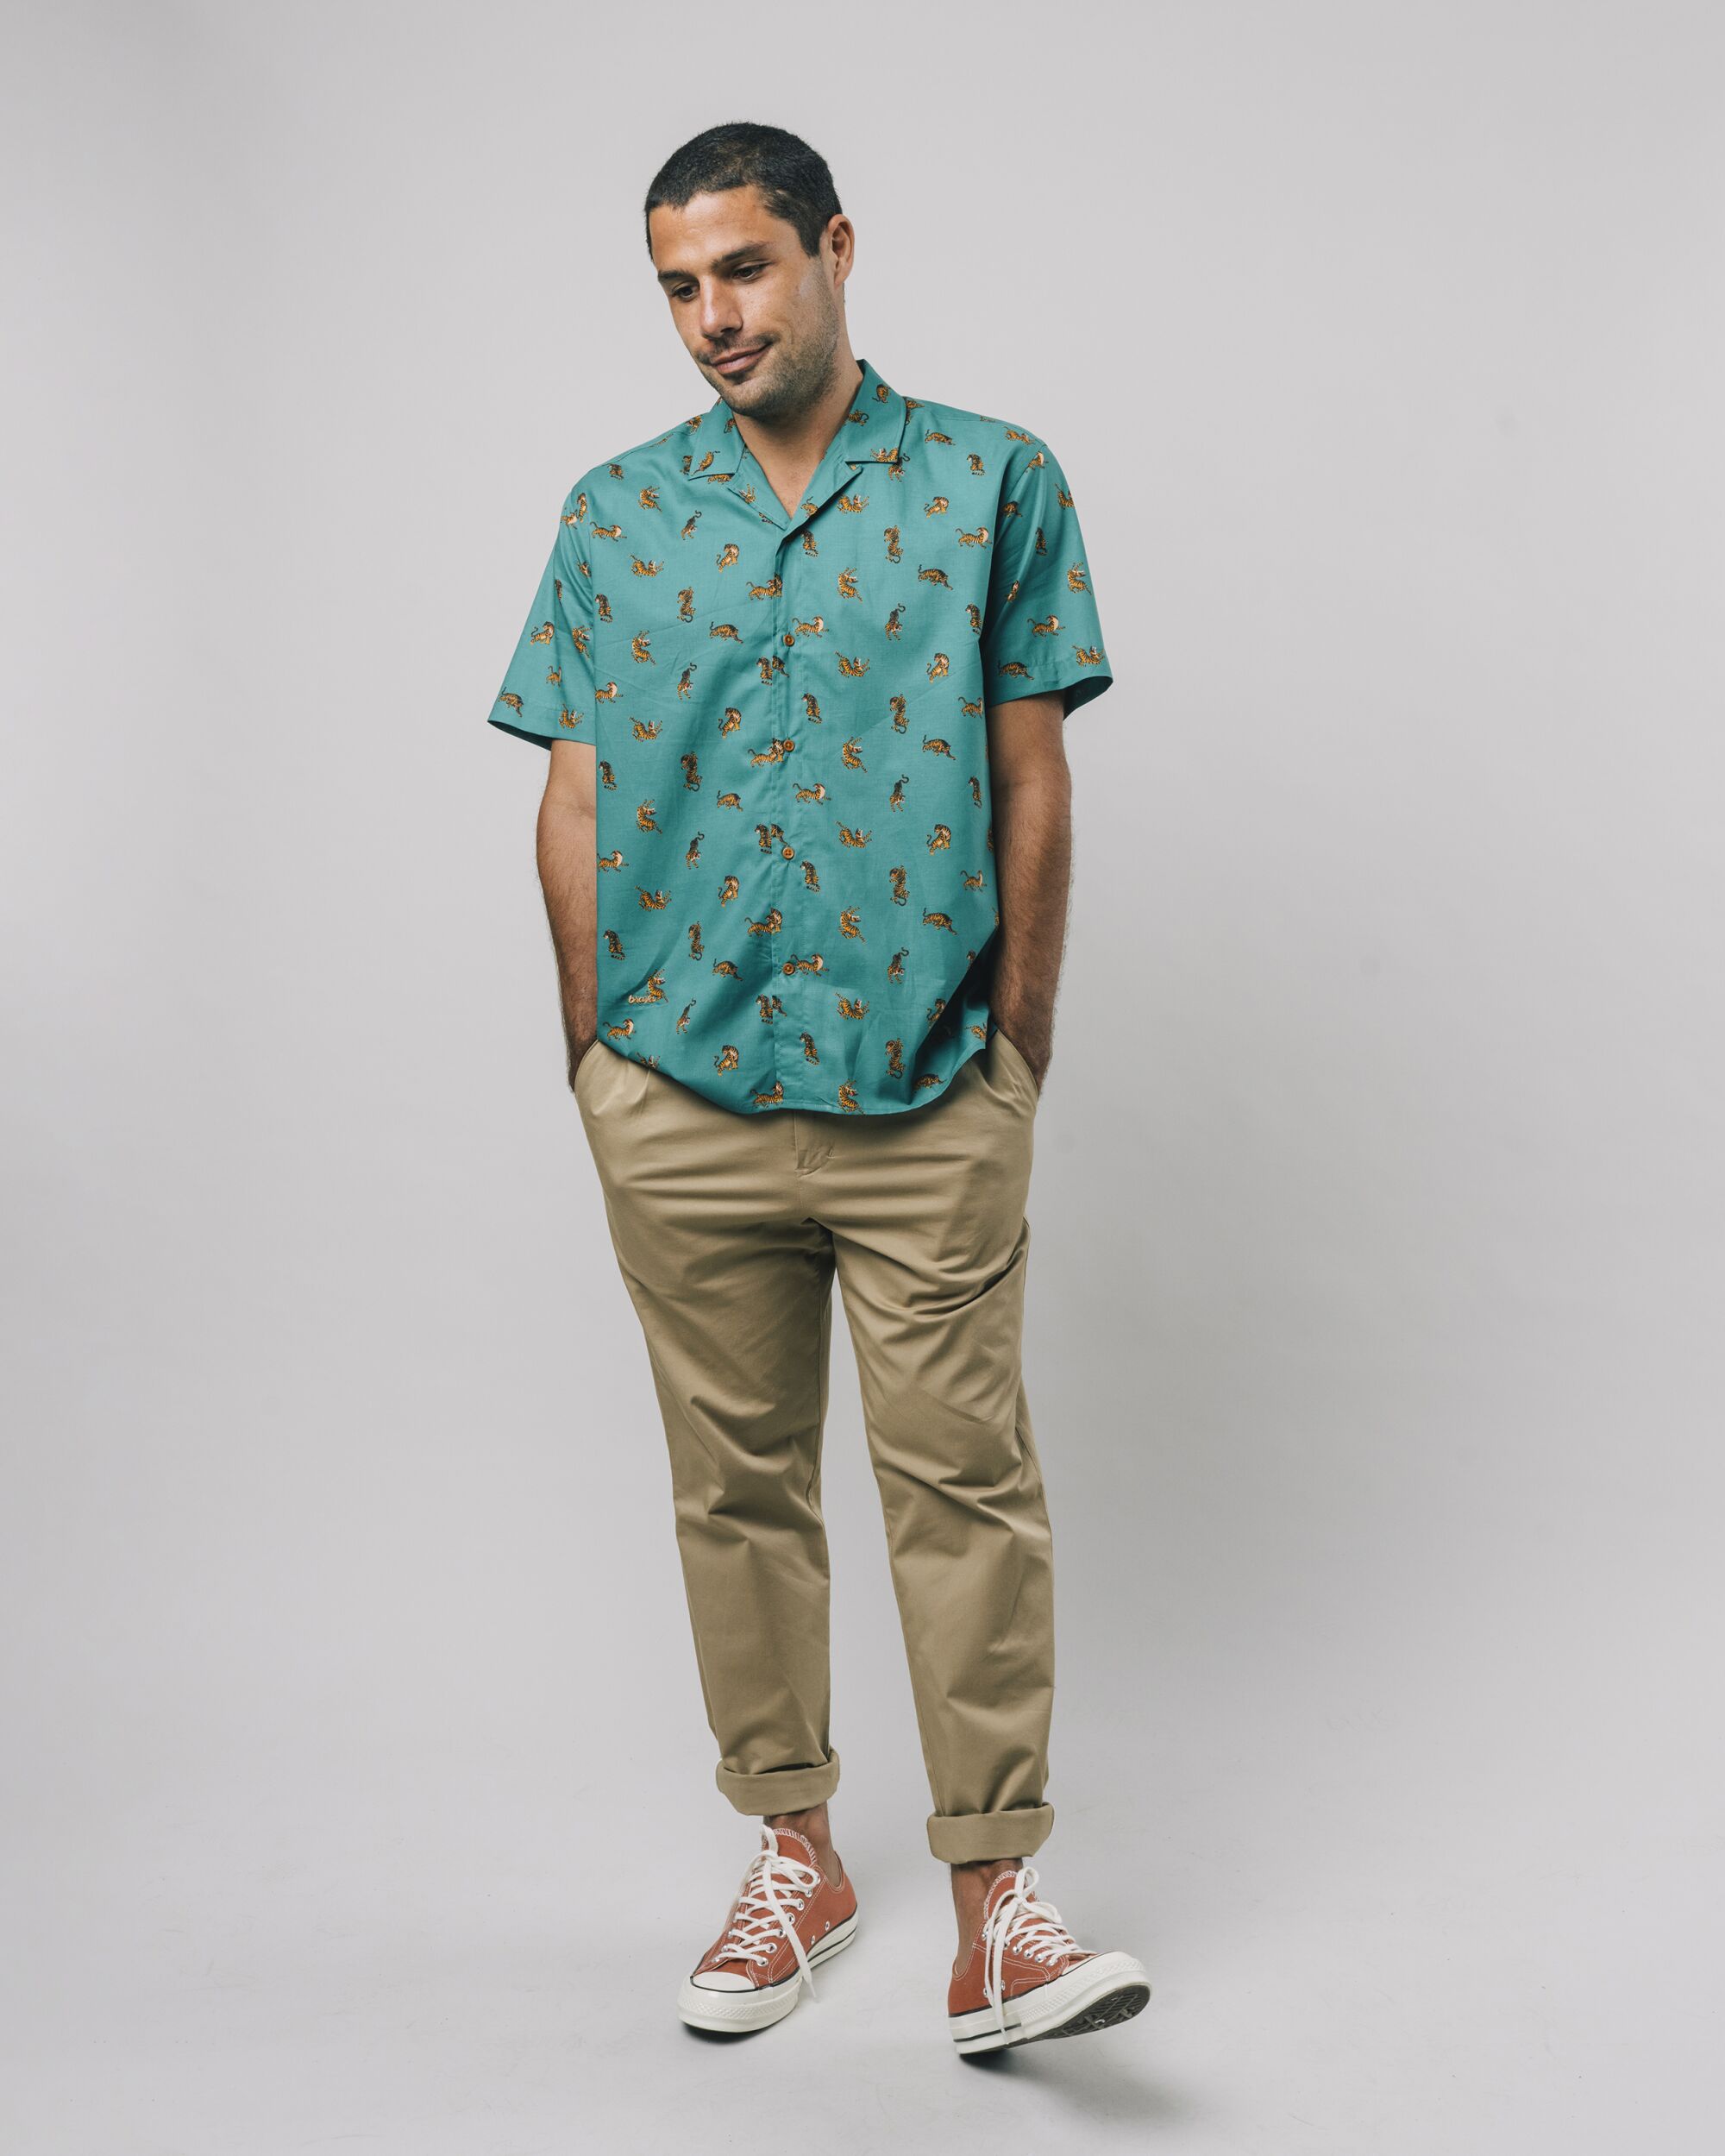 Grünes, bedrucktes T-Shirt Roar Roar Aloha aus 100% Bio-Baumwolle von Brava Fabrics